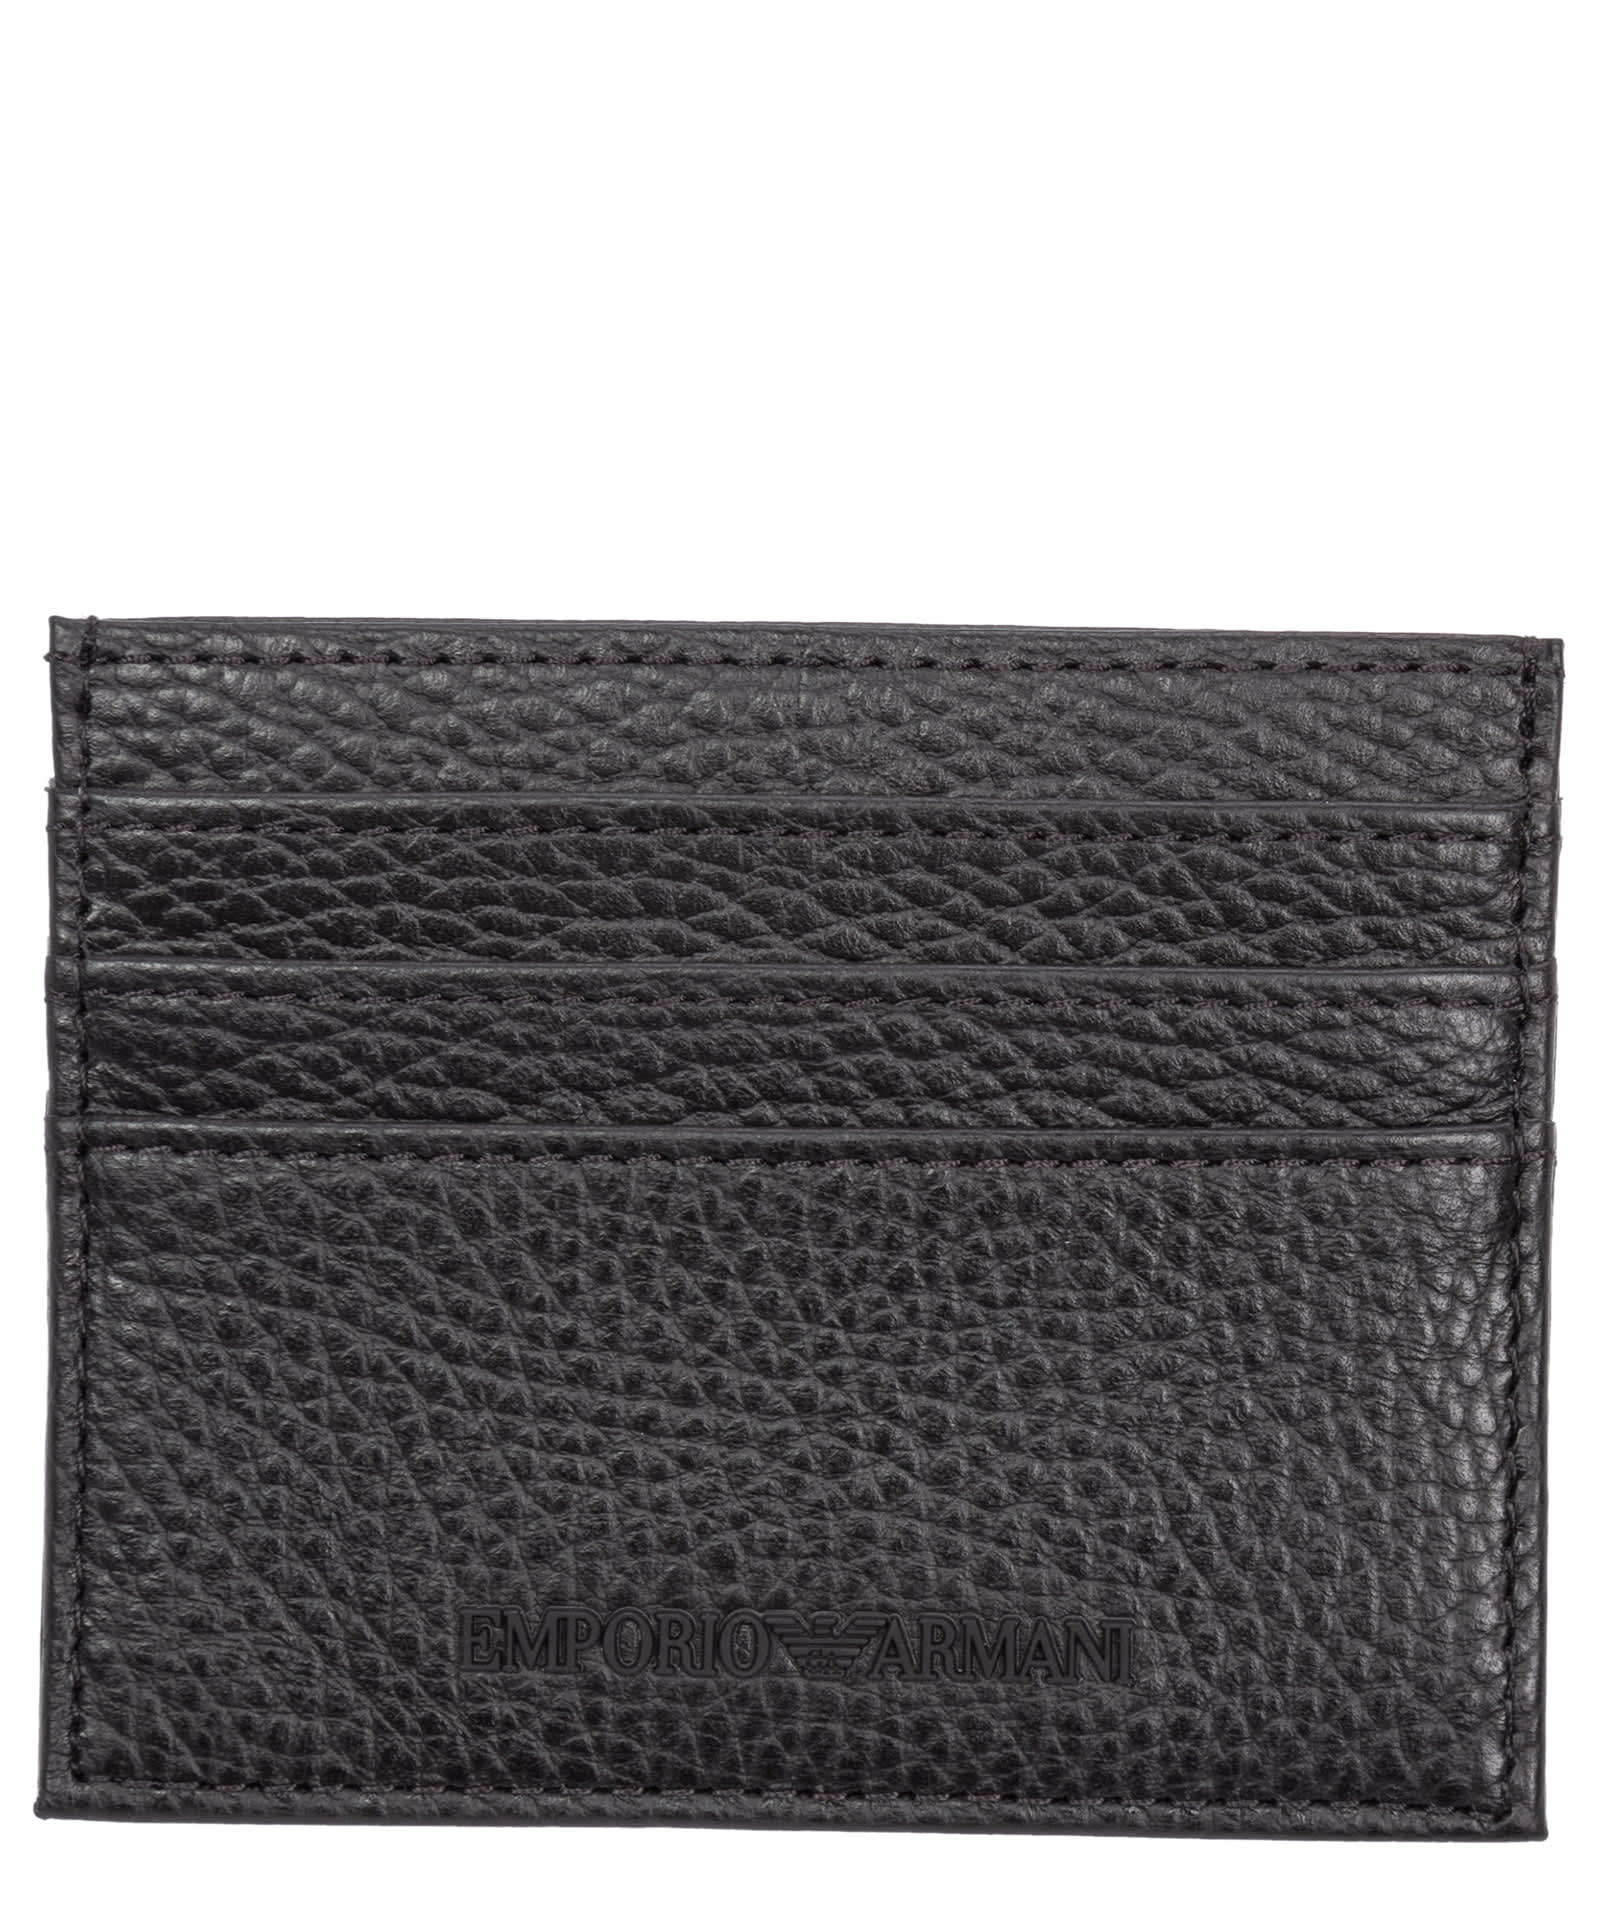 Emporio Armani Leather Credit Card Holder